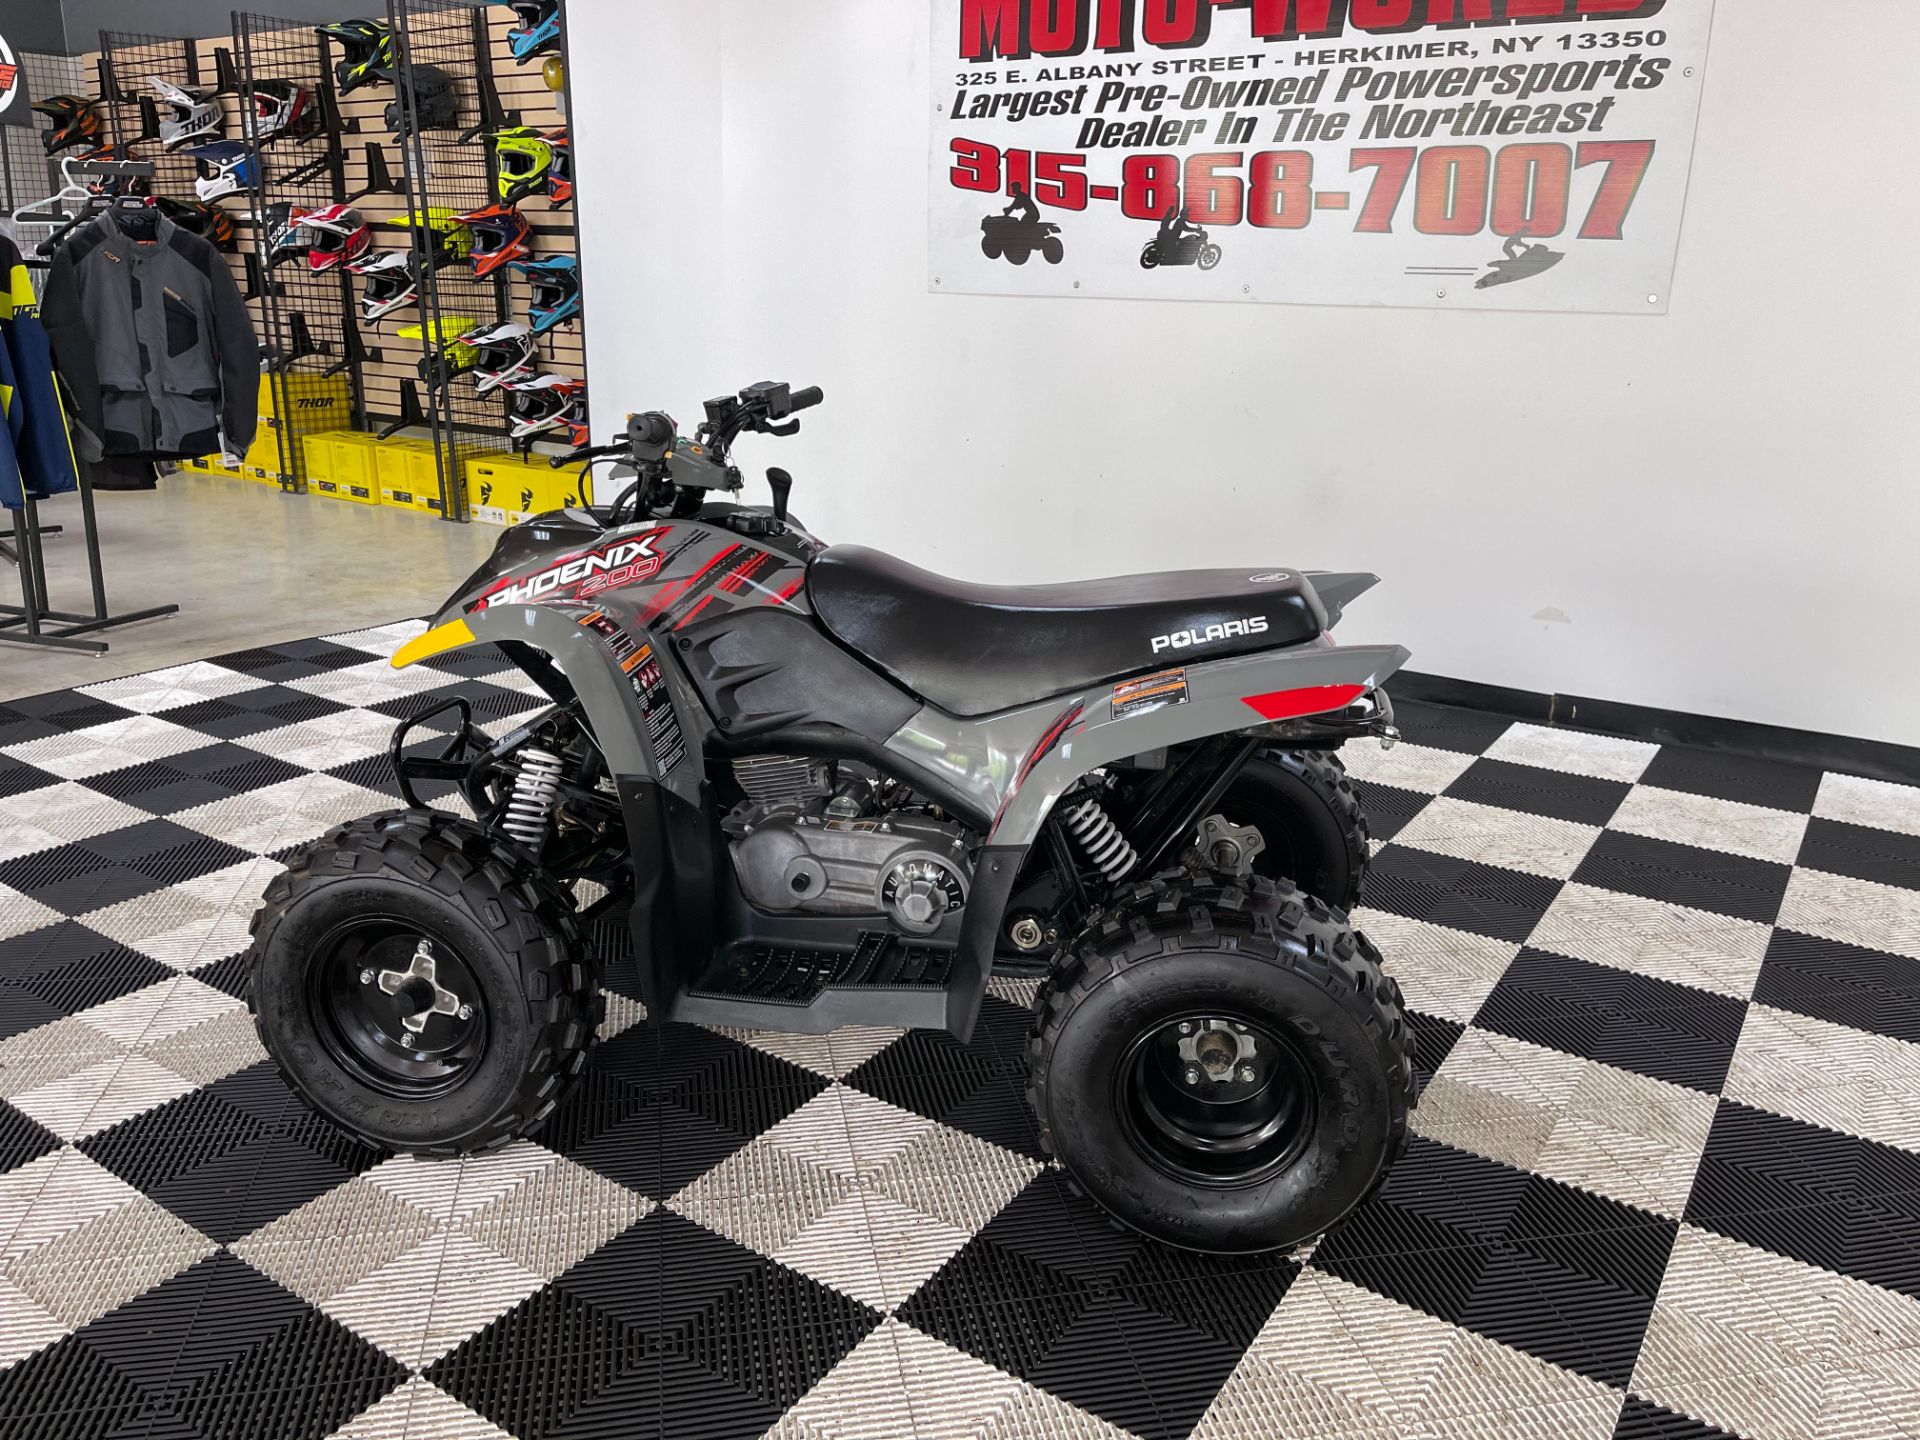 Used 2018 Polaris Phoenix 200 ATVs in Herkimer, NY Stock